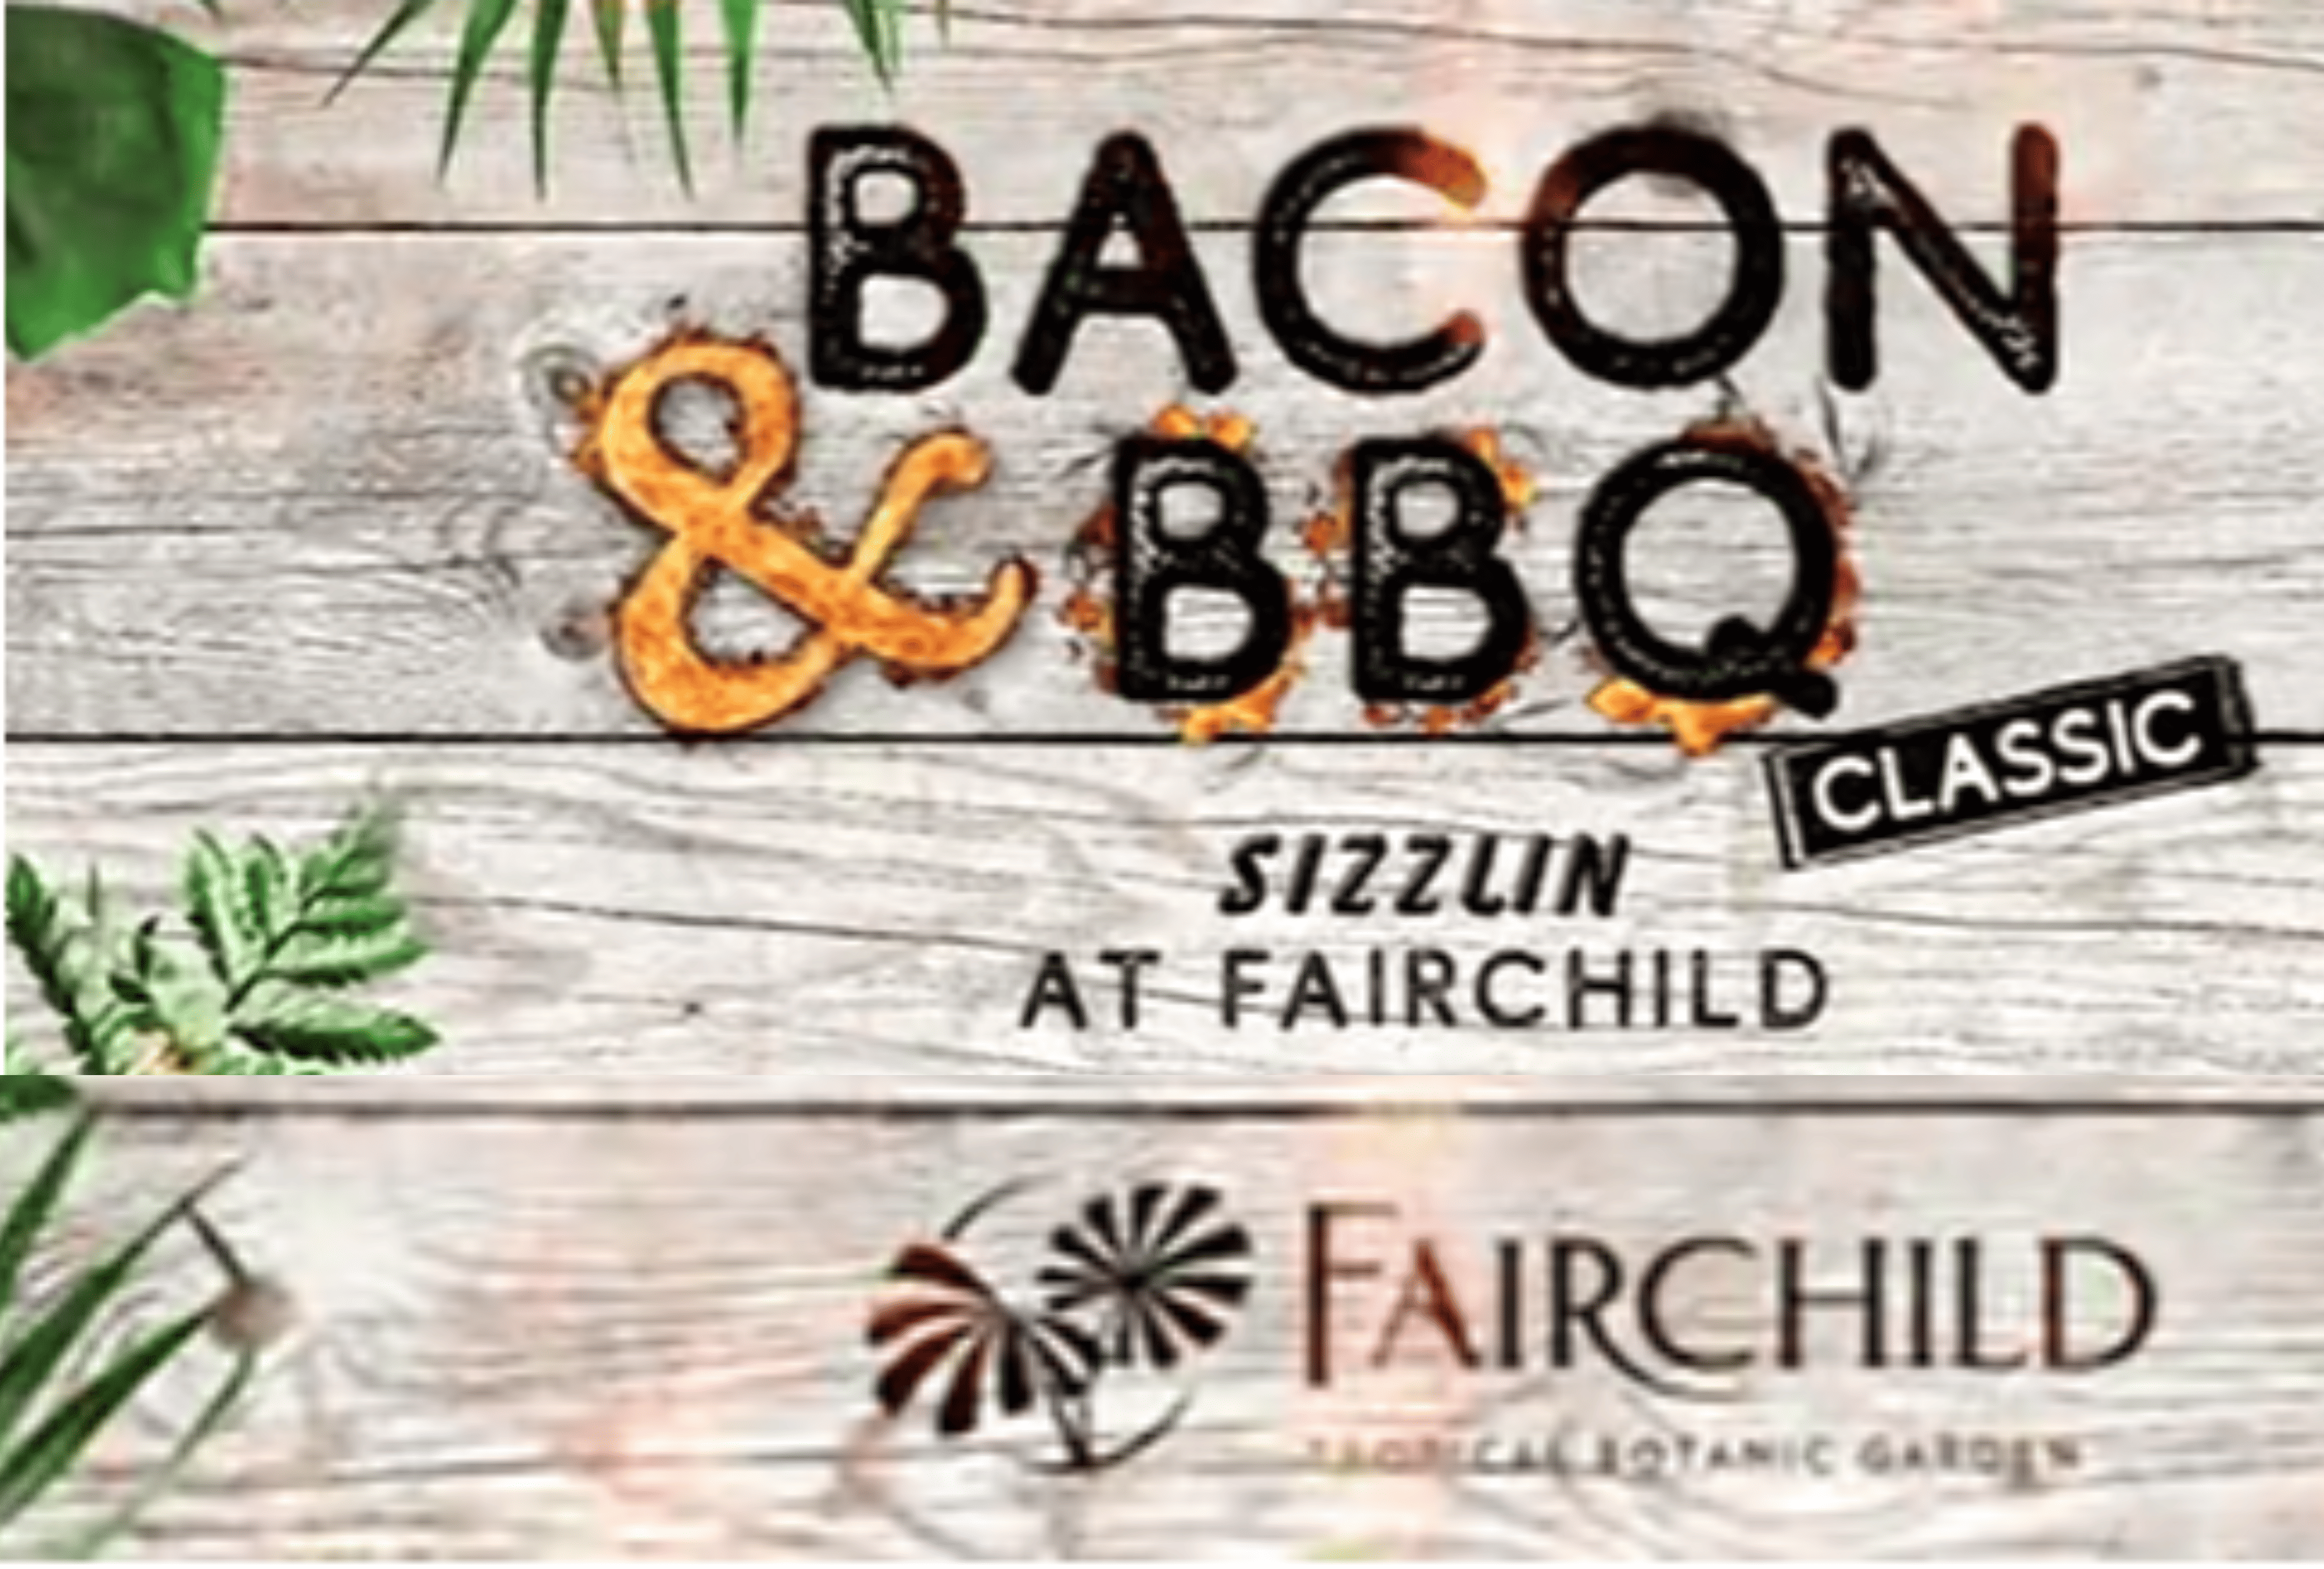 Fairchild Garden - BBQ and Bacon Classic